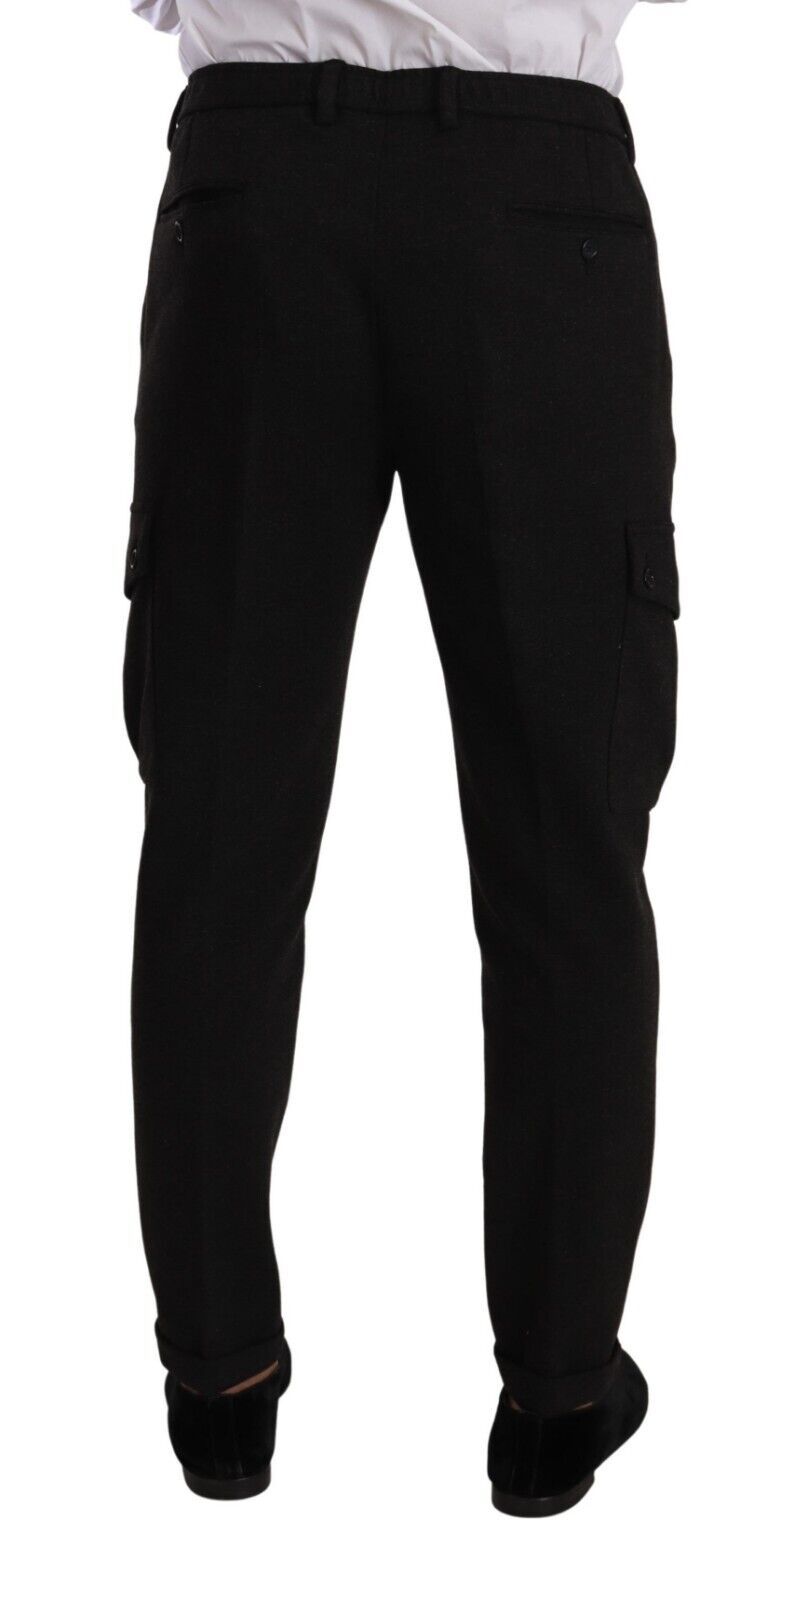 Dolce & Gabbana Sleek Skinny Cargo Pants in Timeless Black